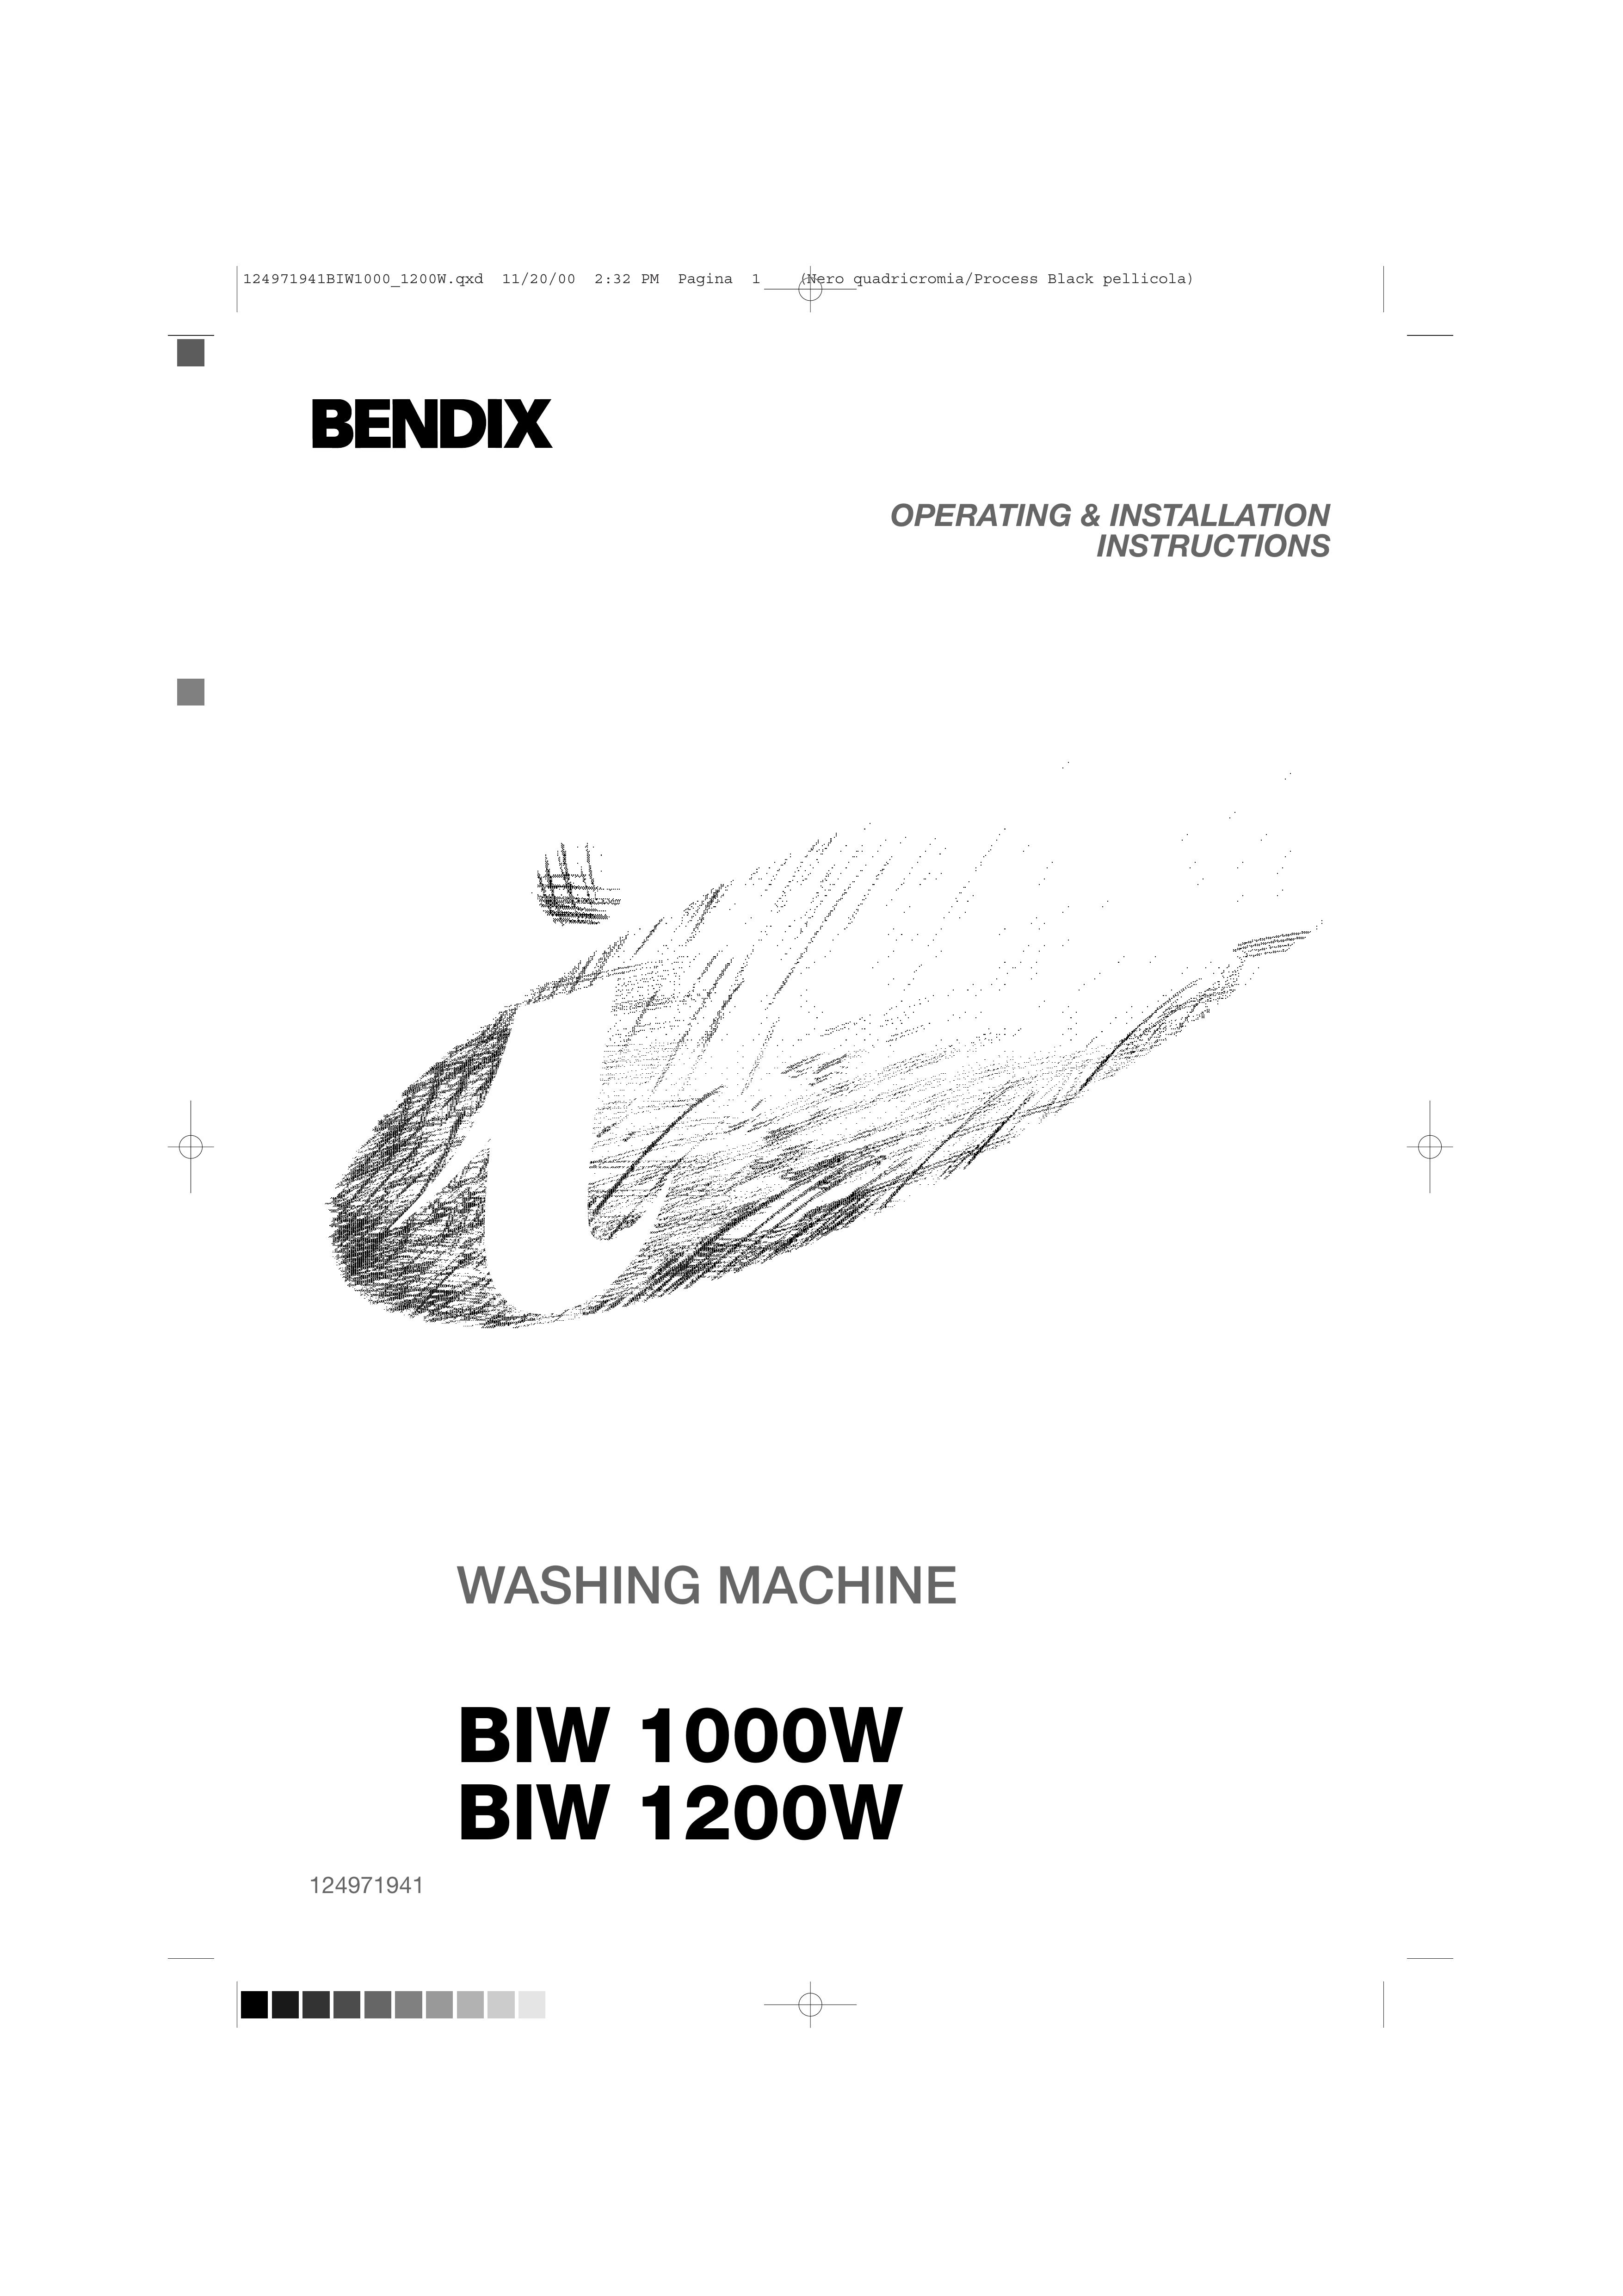 Tricity Bendix BIW 1200W Washer User Manual